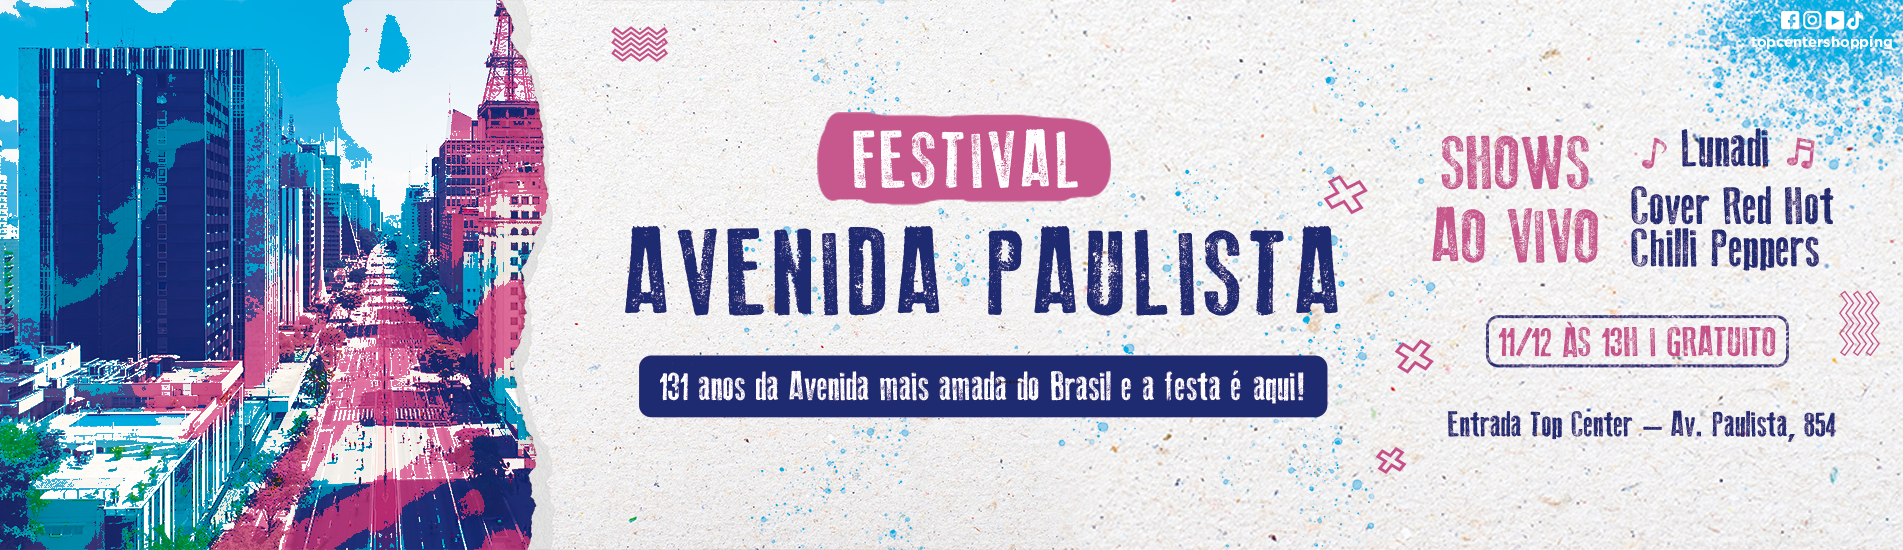 Festival Avenida Paulista